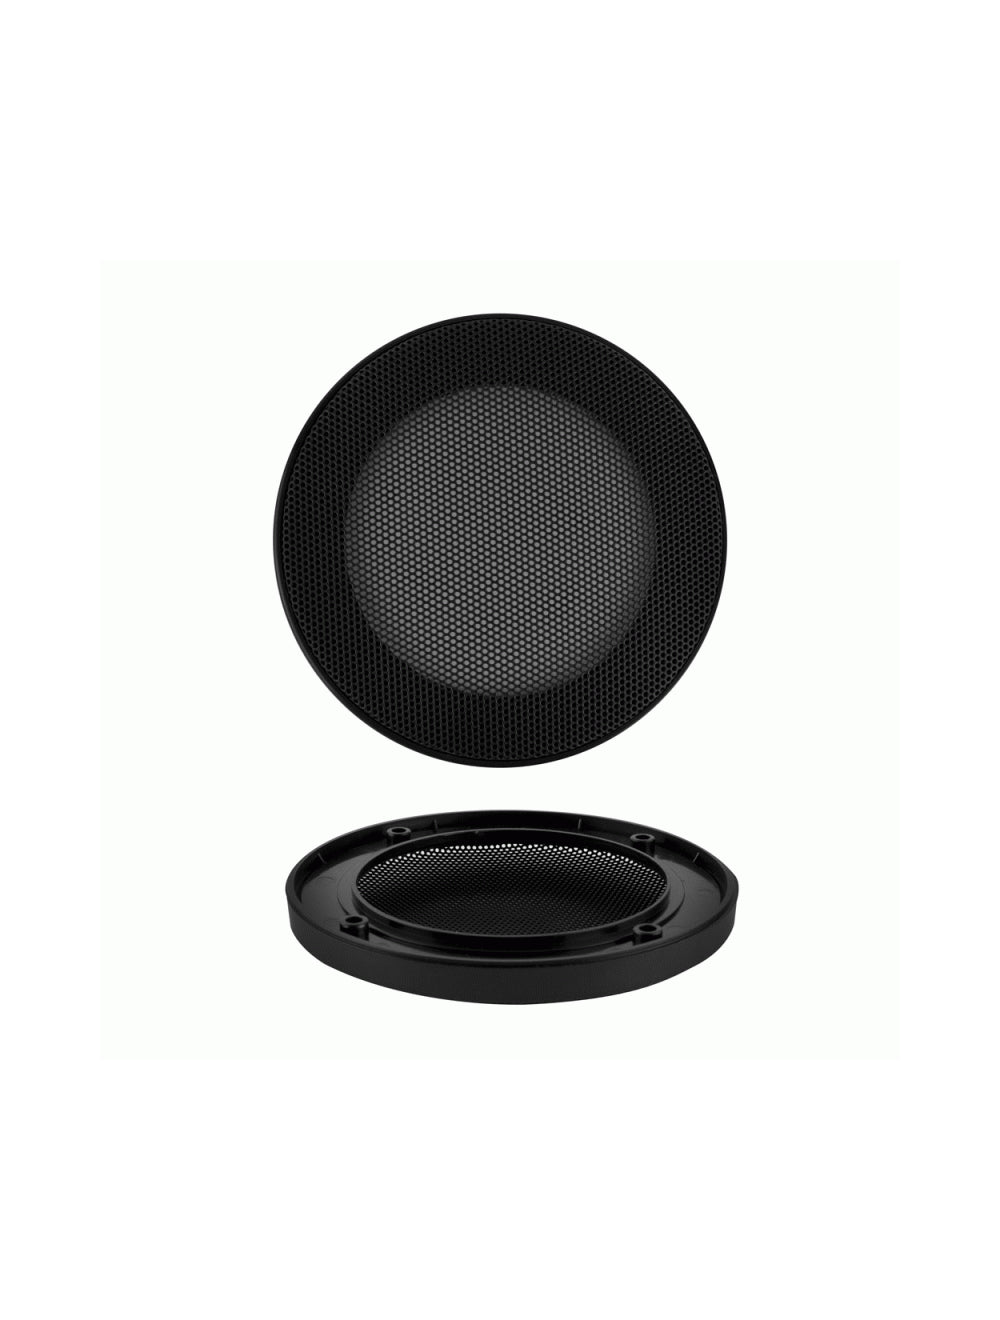 Installbay SMG525 5.25" Snap-On Mesh Speaker Grill